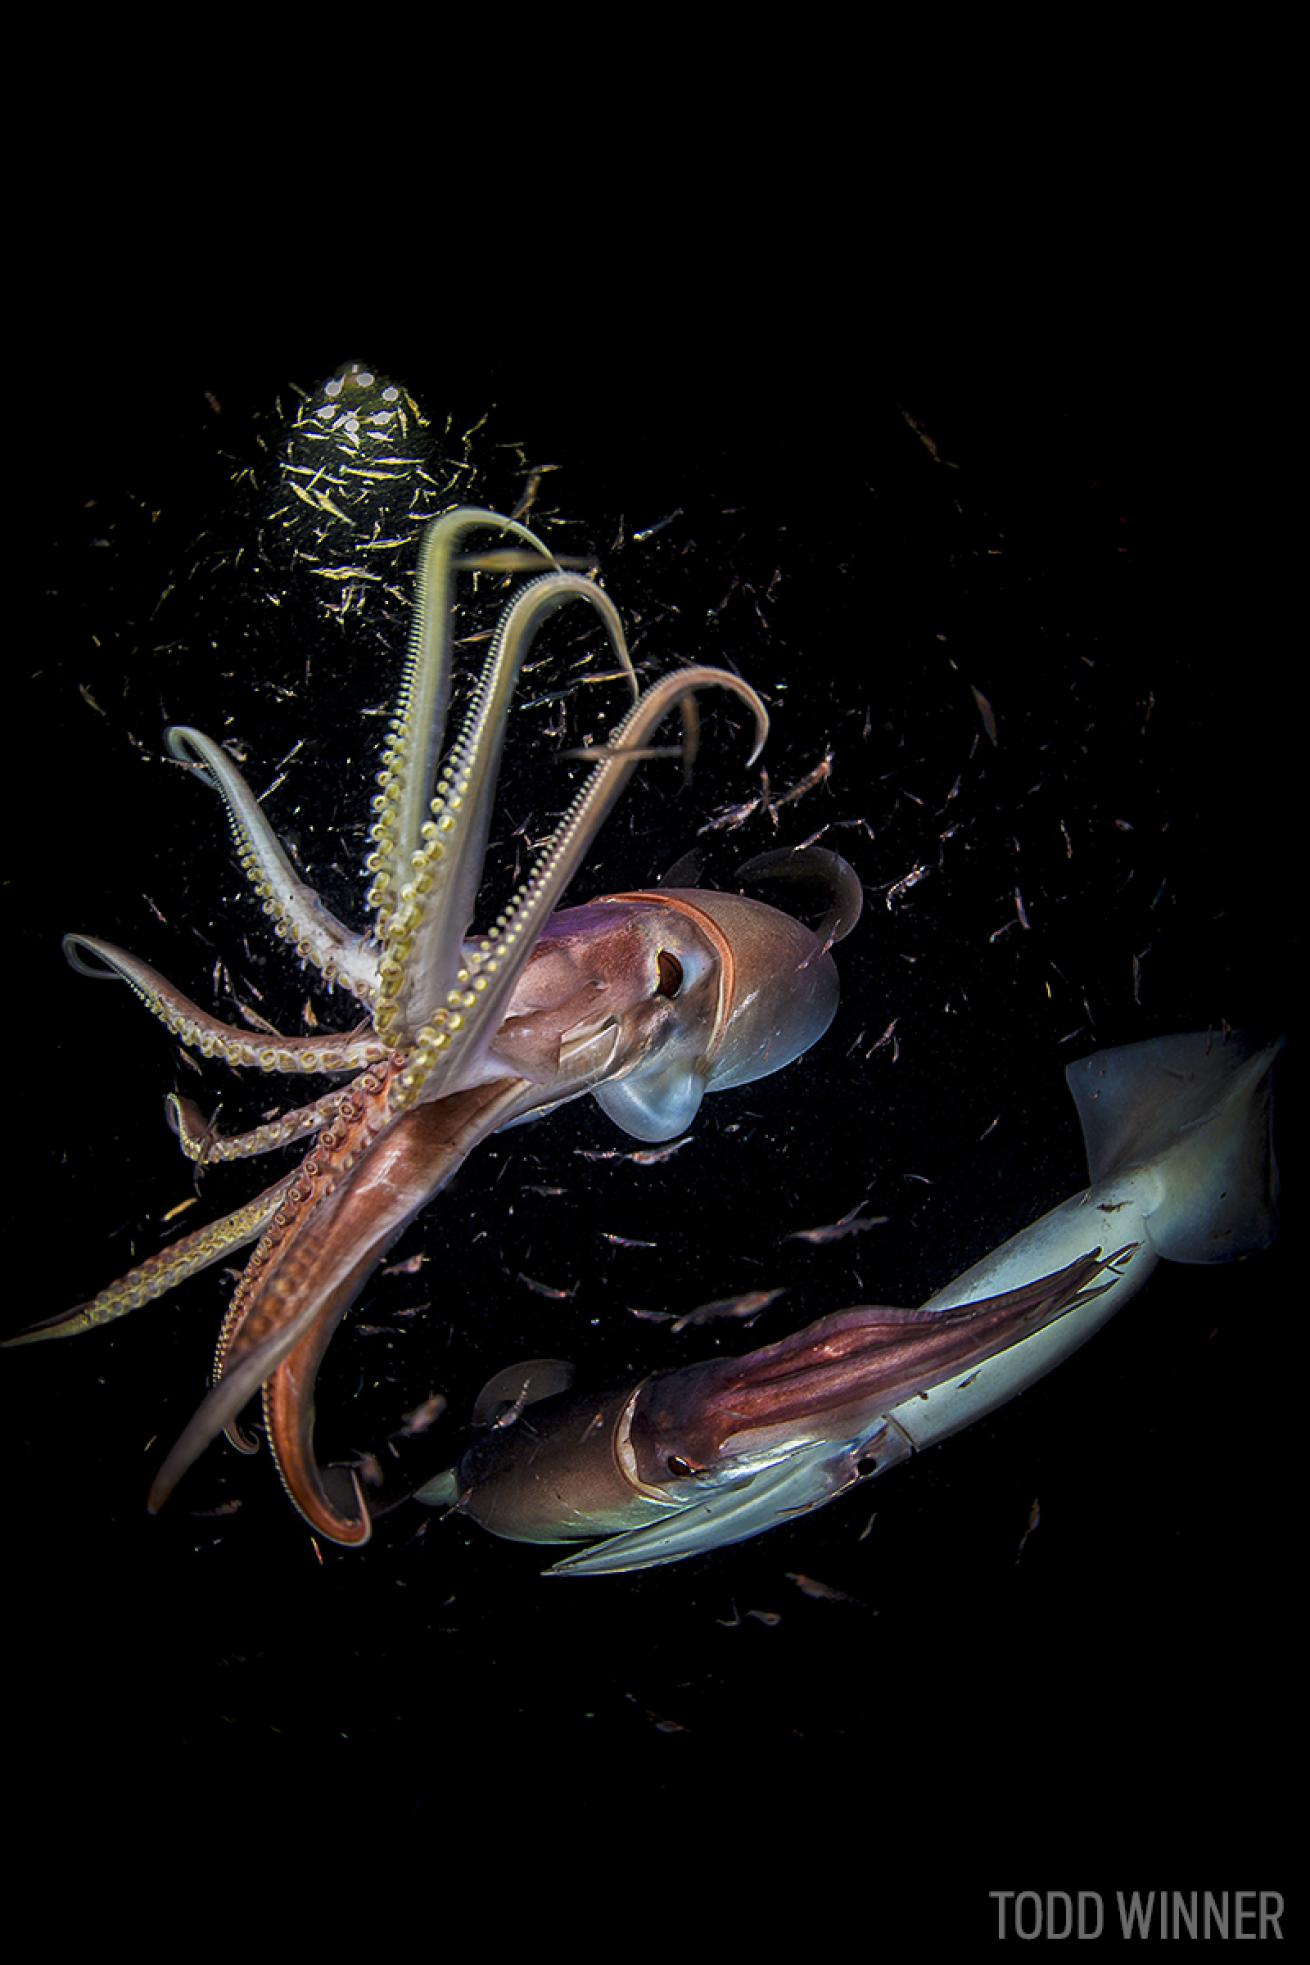 Humboldt squid encounter underwater photo